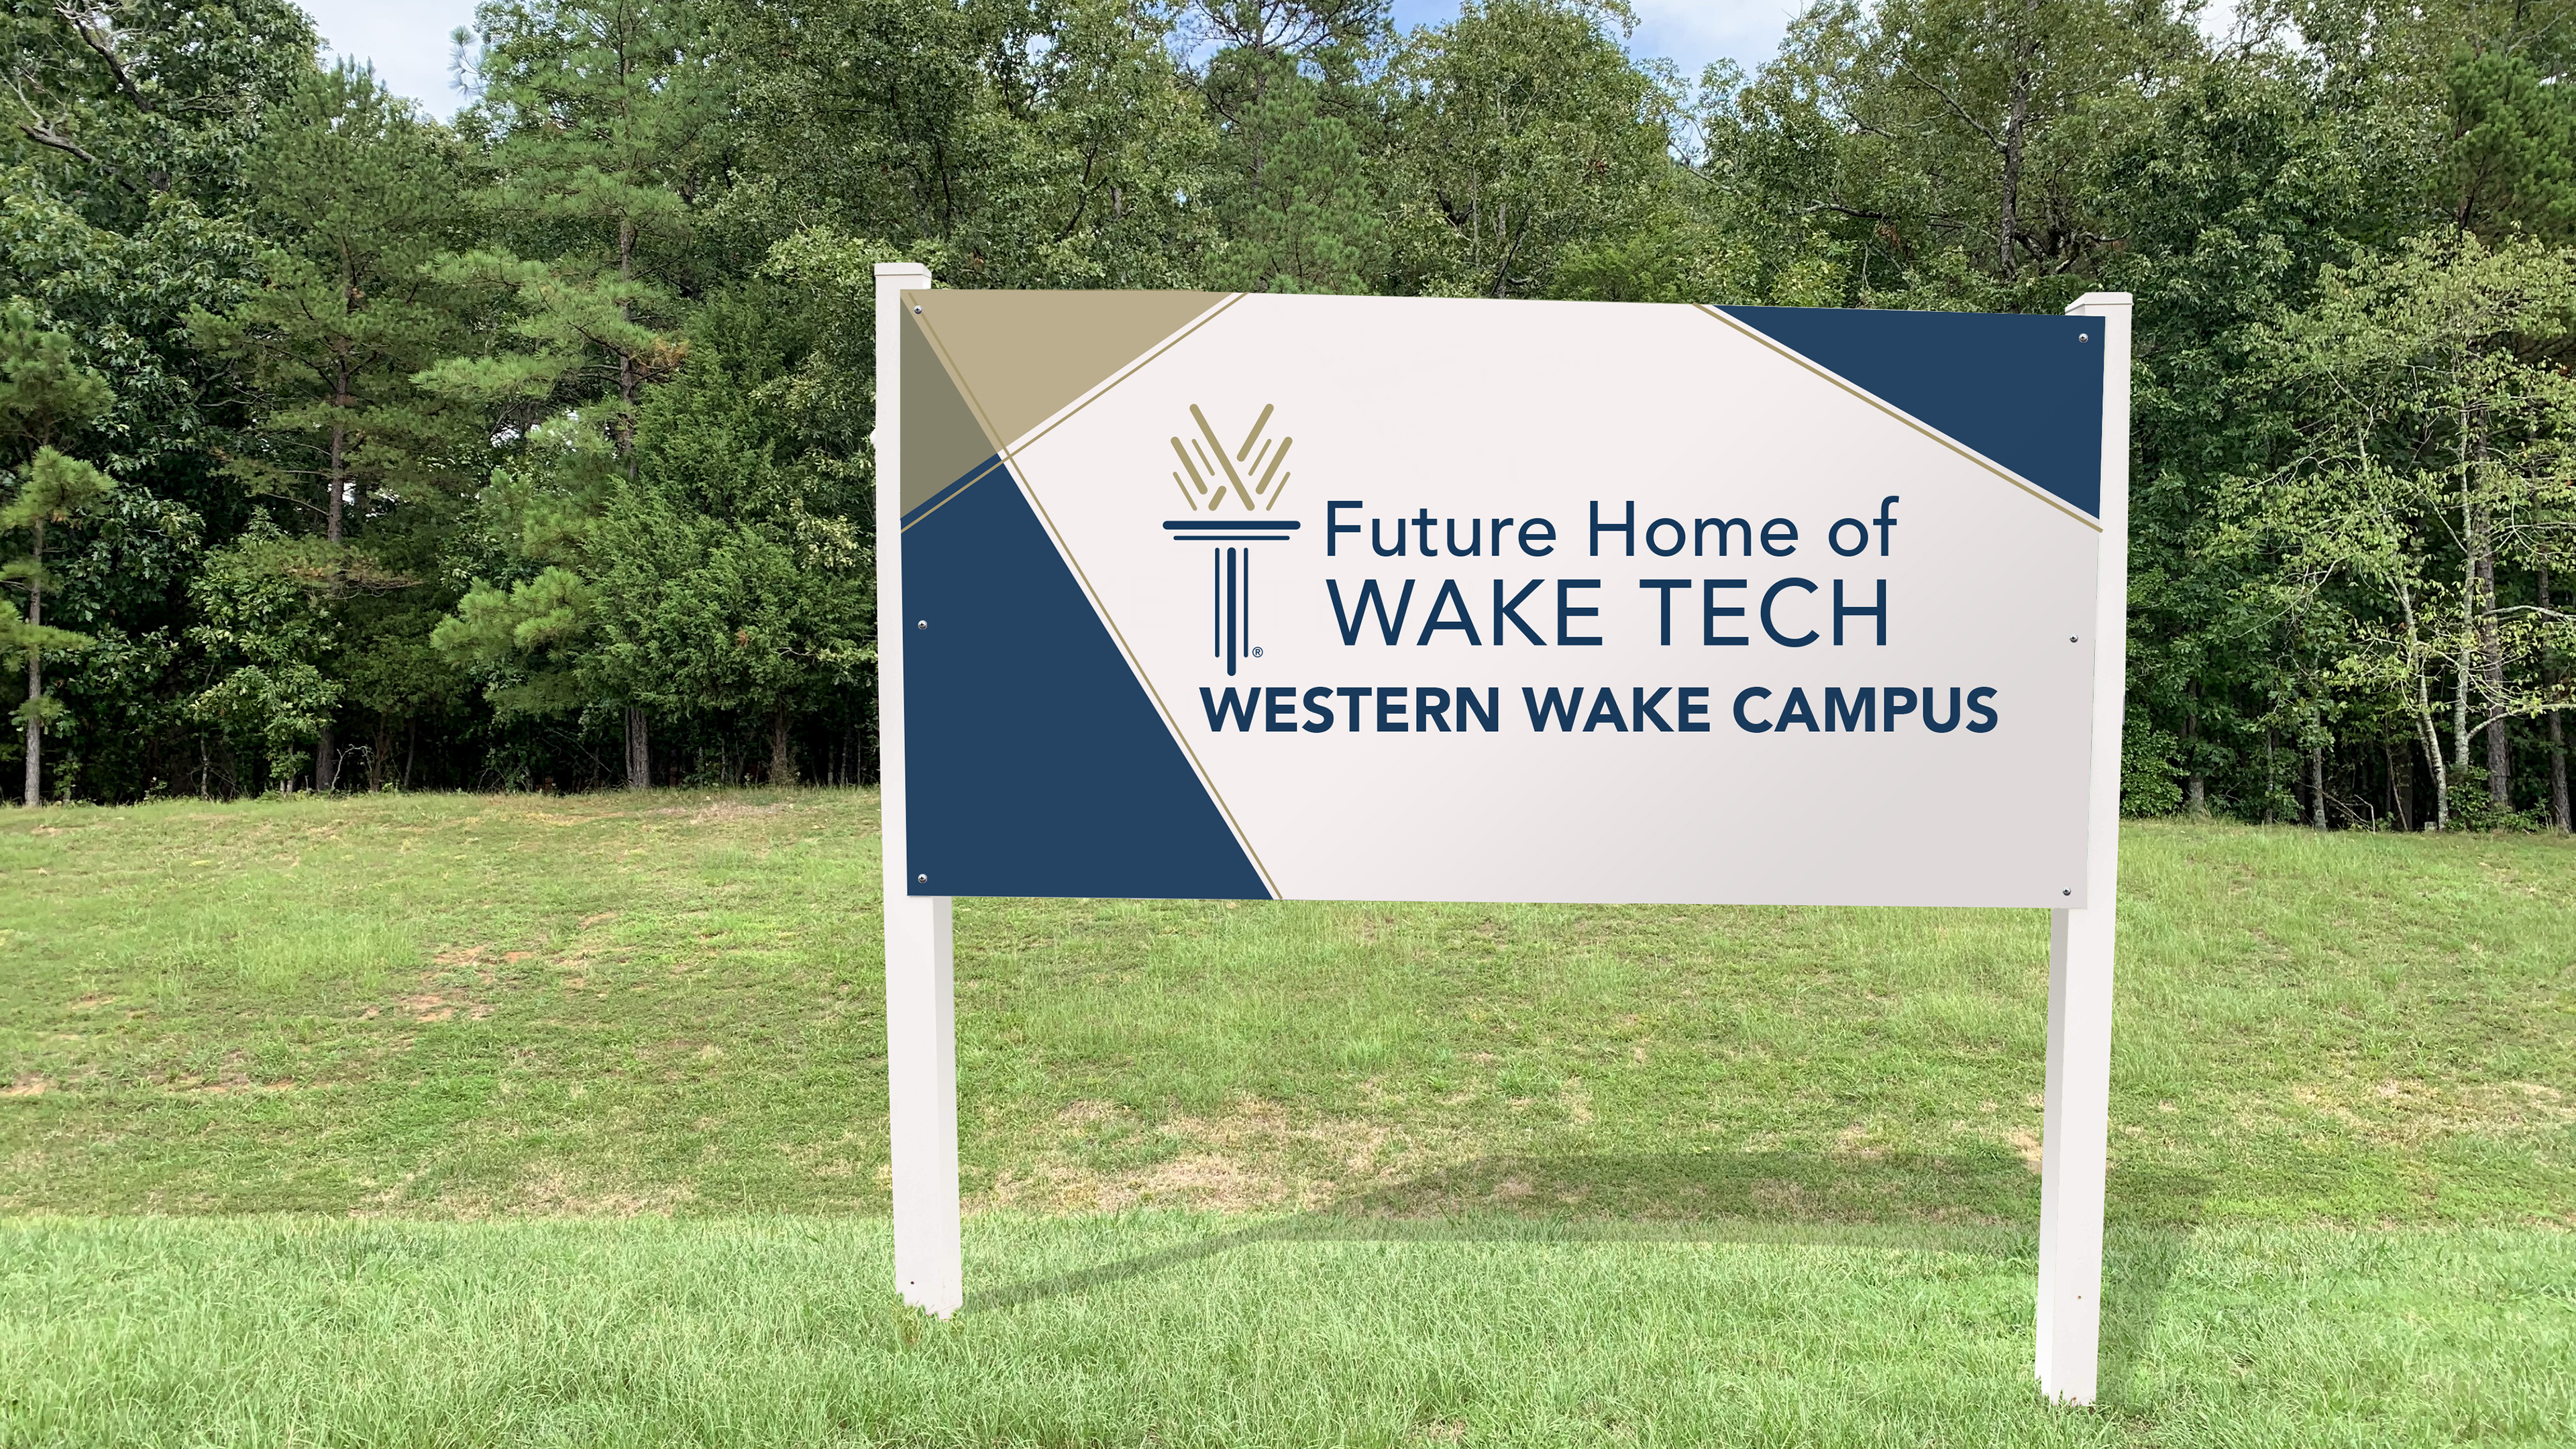 Western Wake Campus sign